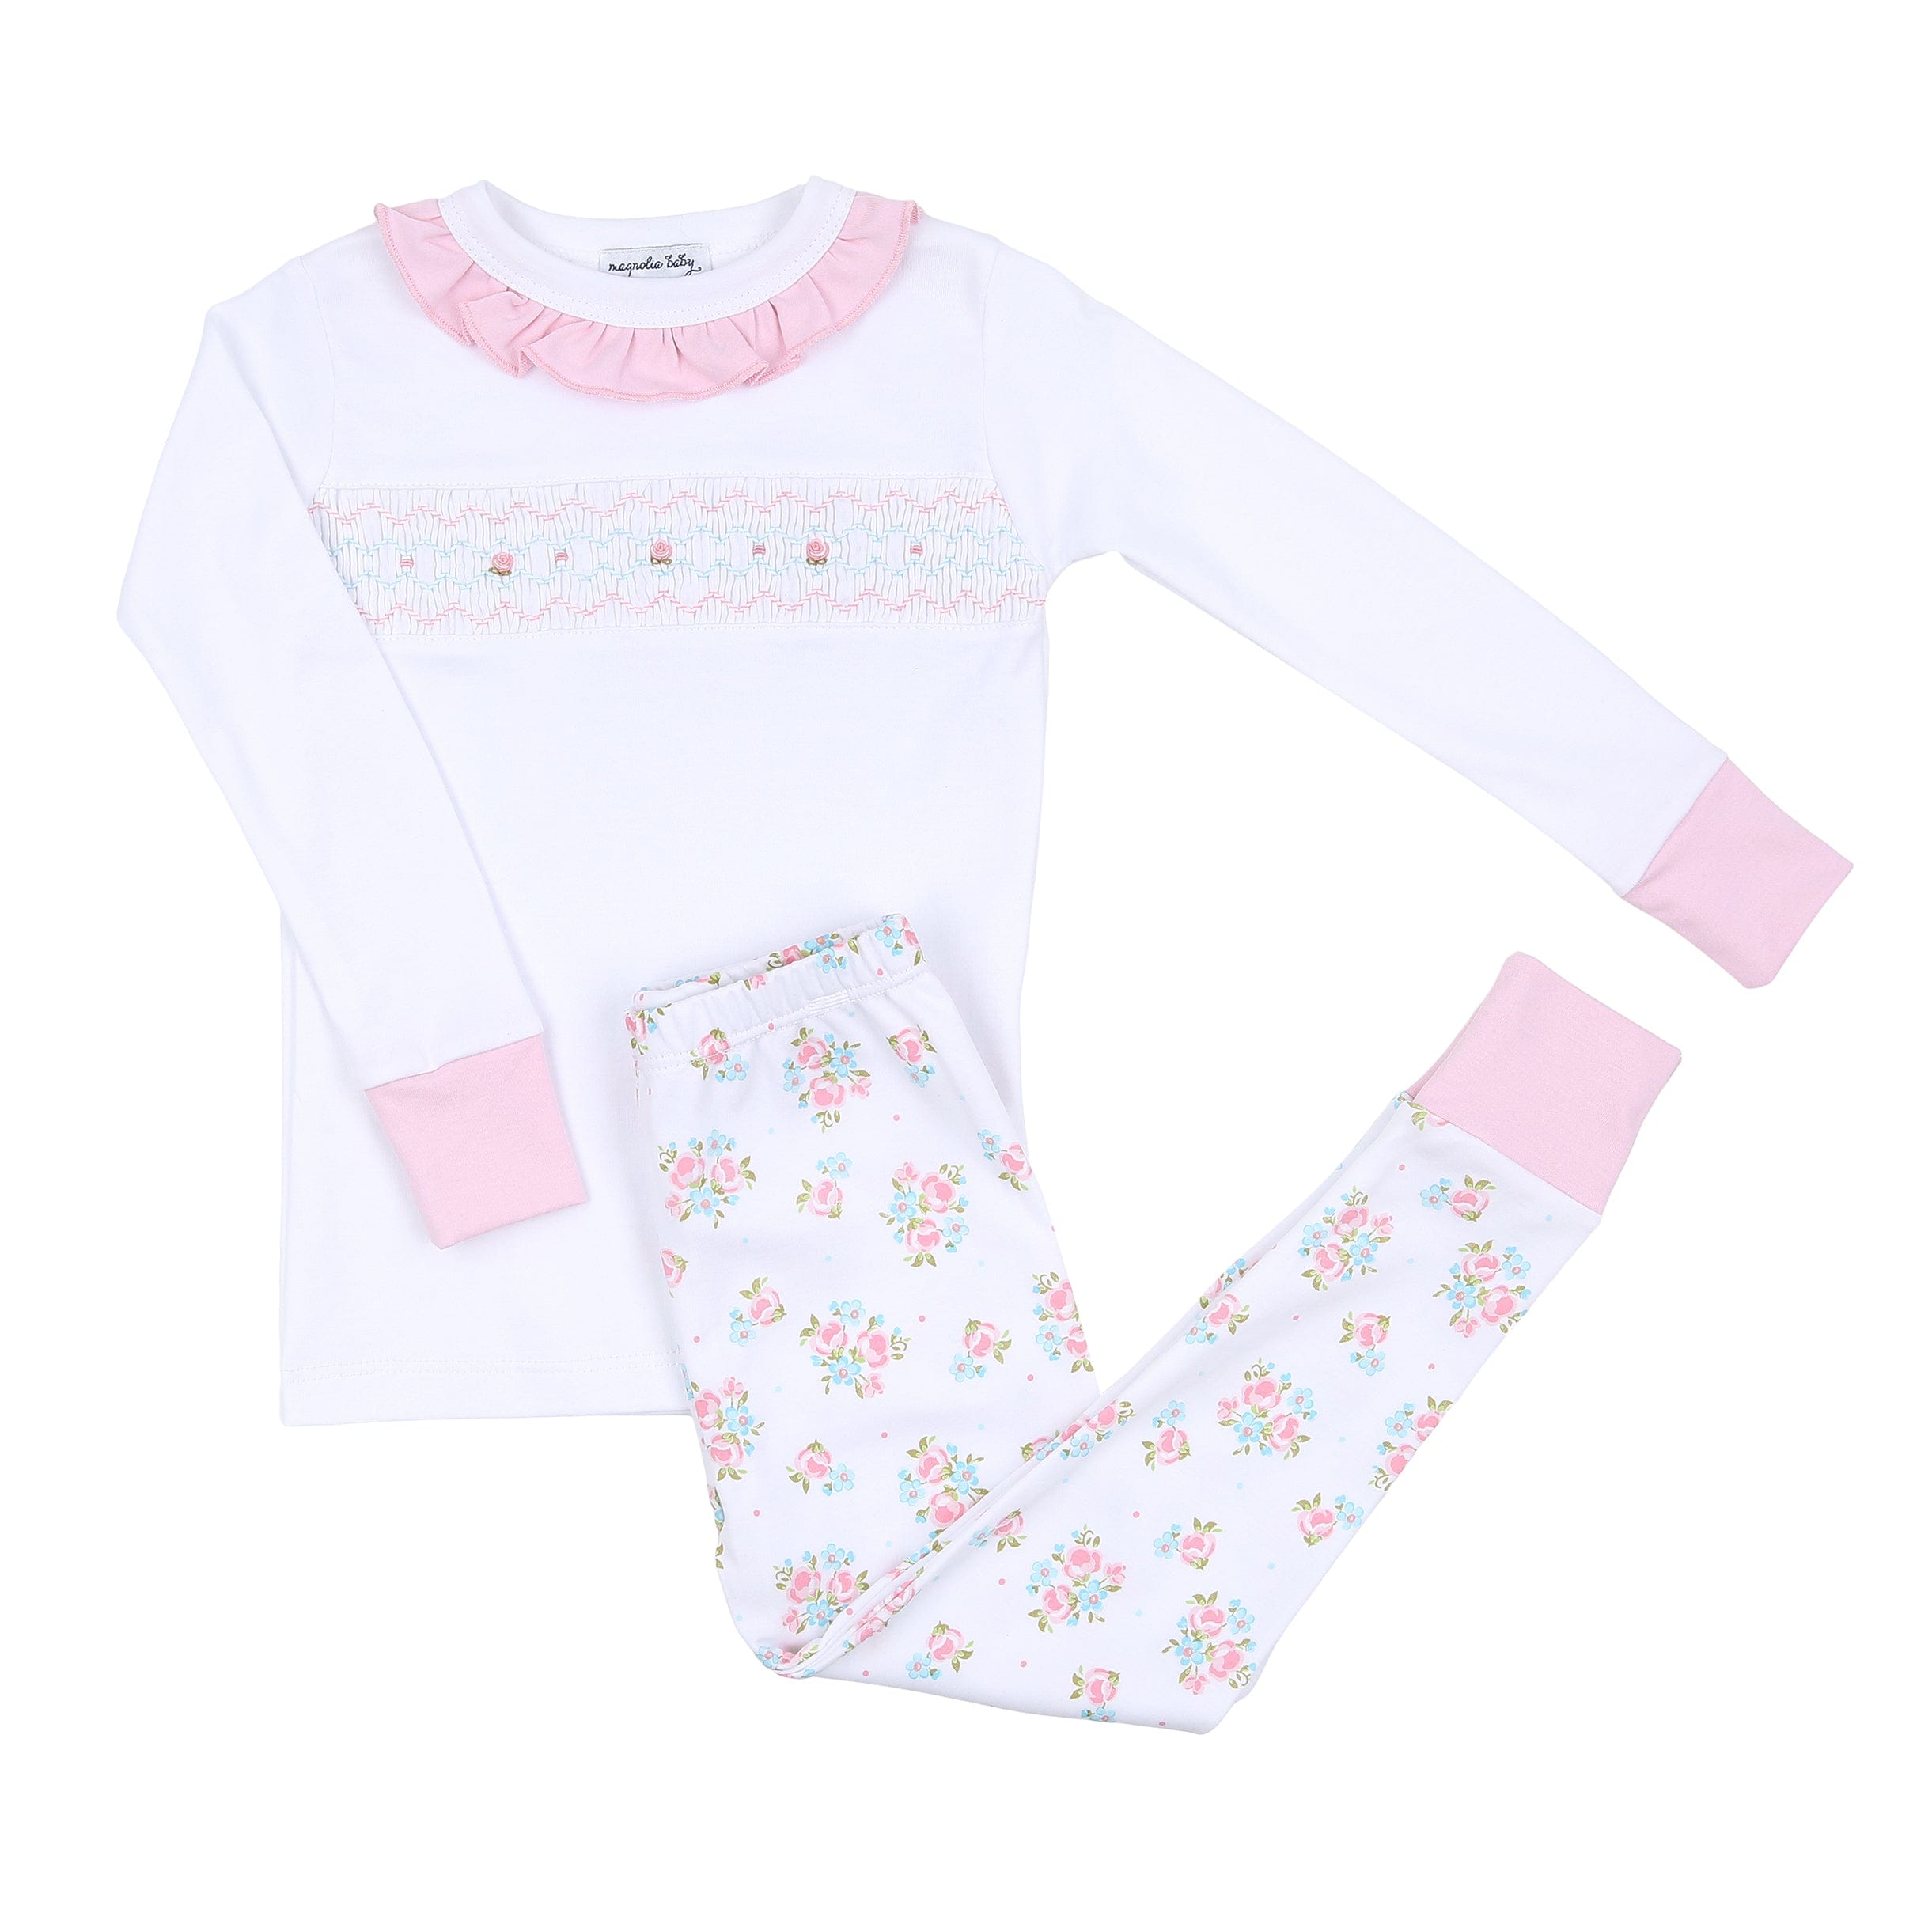 MAGNOLIA BABY - Annalise’s Classics Smocked Pyjamas - Pink